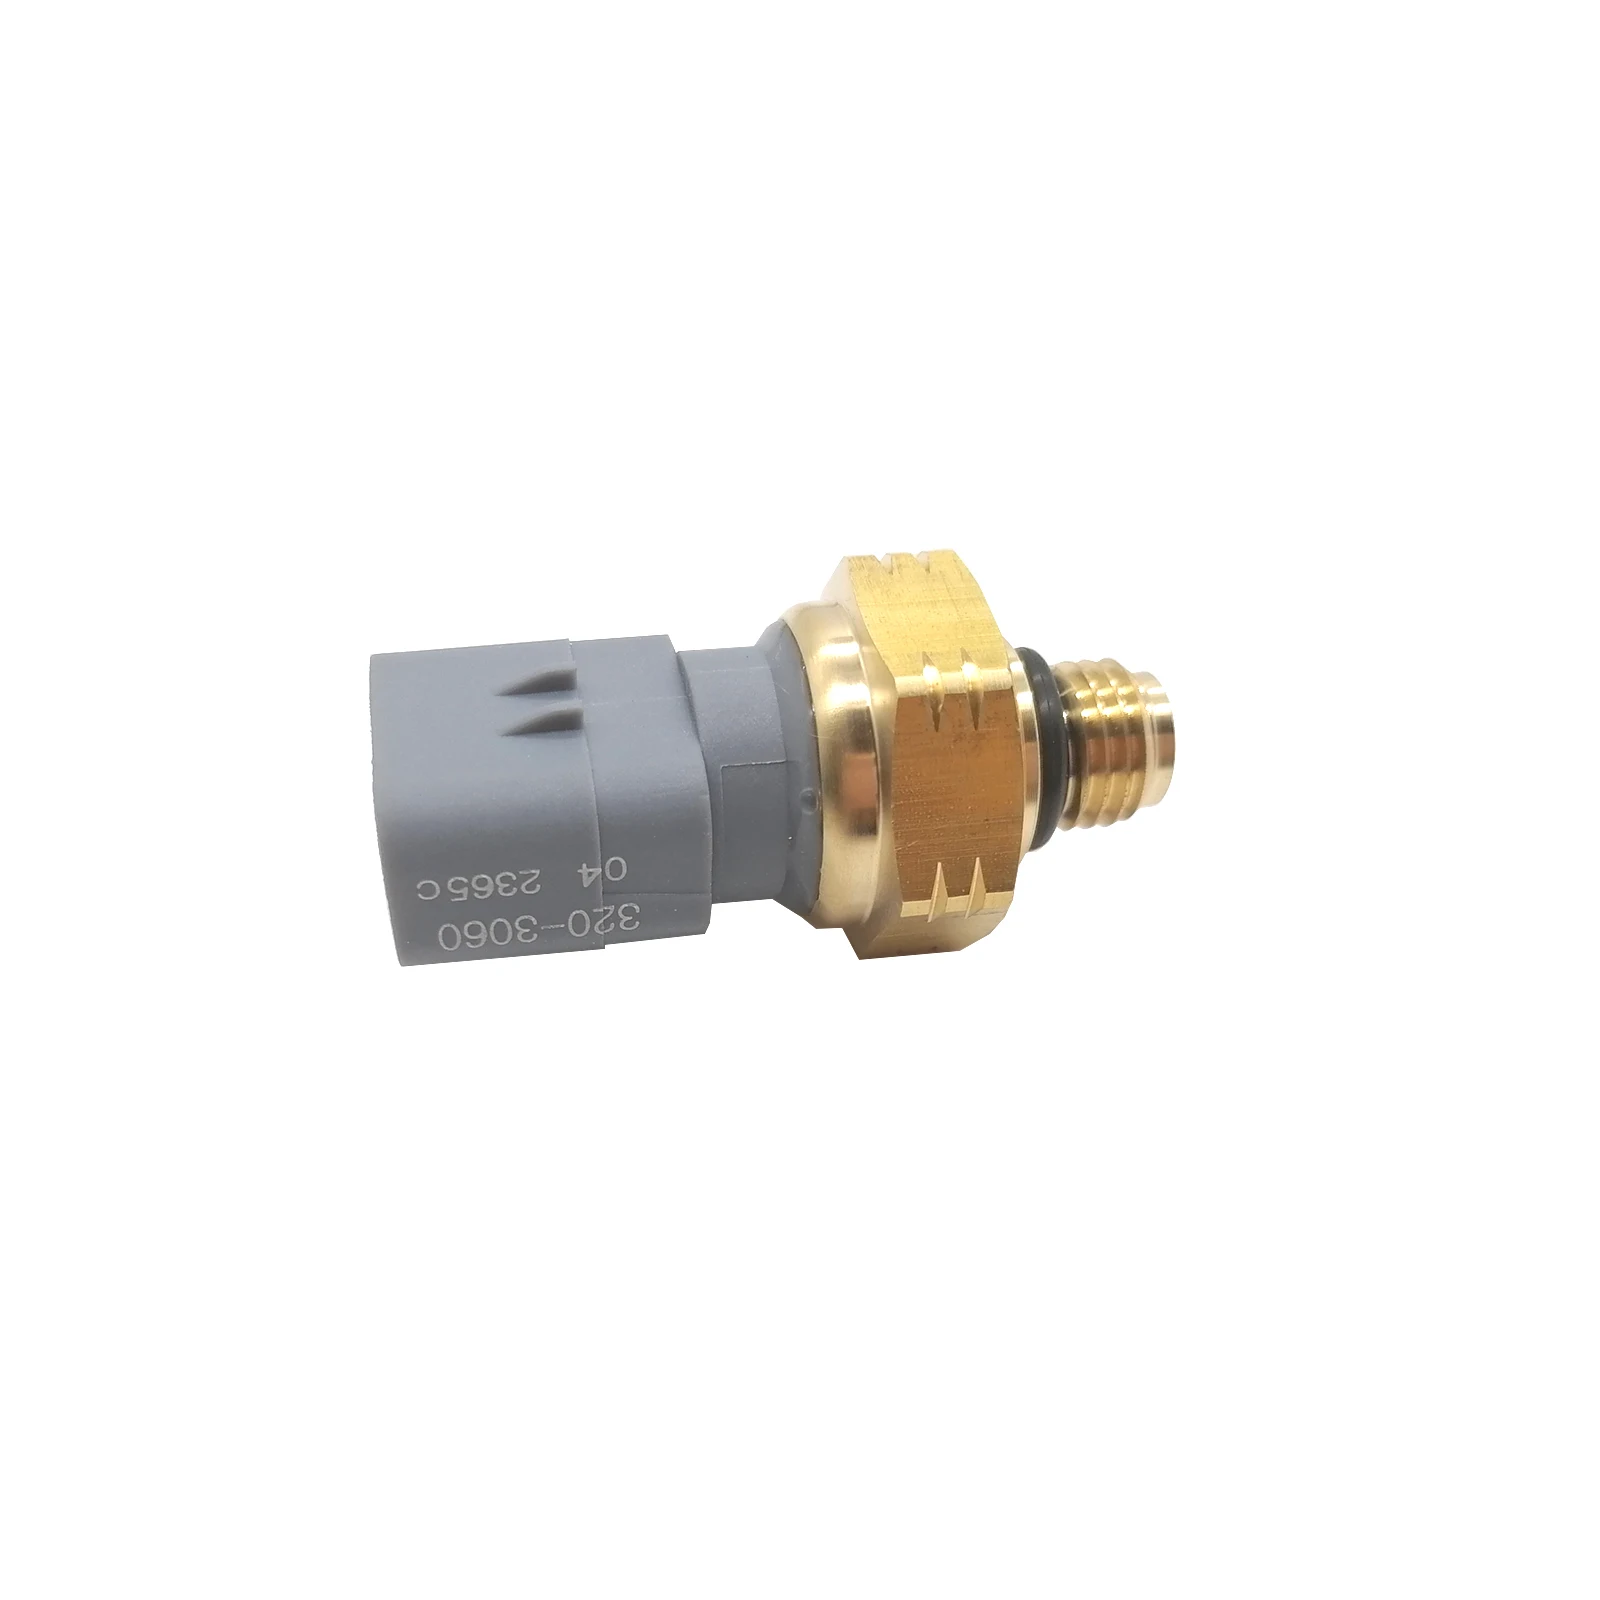 

TOPVELSUN 320-3060 3203060 Oil Pressure Sensor Compatible with Caterpillar E312D E320D E329D E330D Excavator C4.4 C7.1 C9 C13 C2